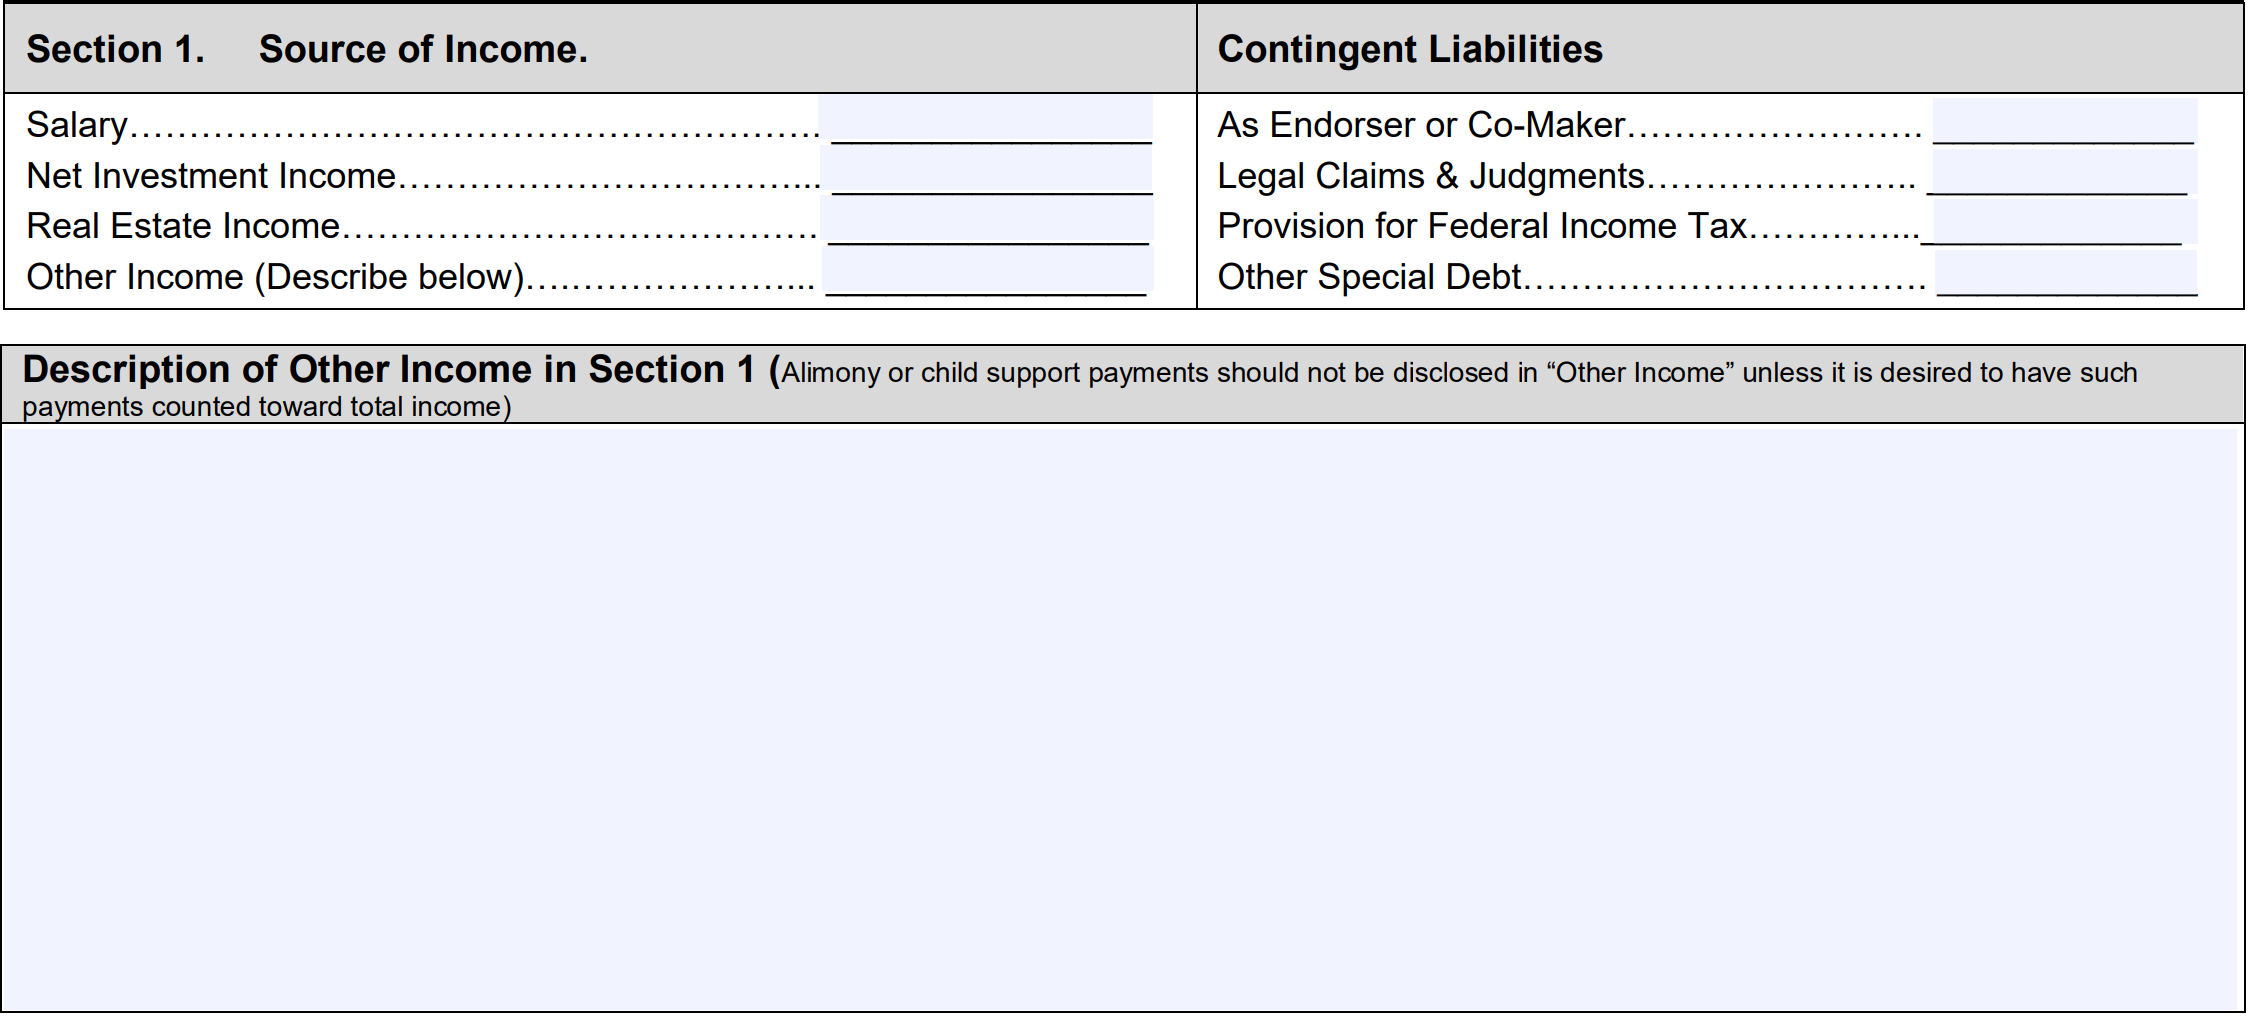 SBA form 413, SA personal financial statement, contingent liabilities